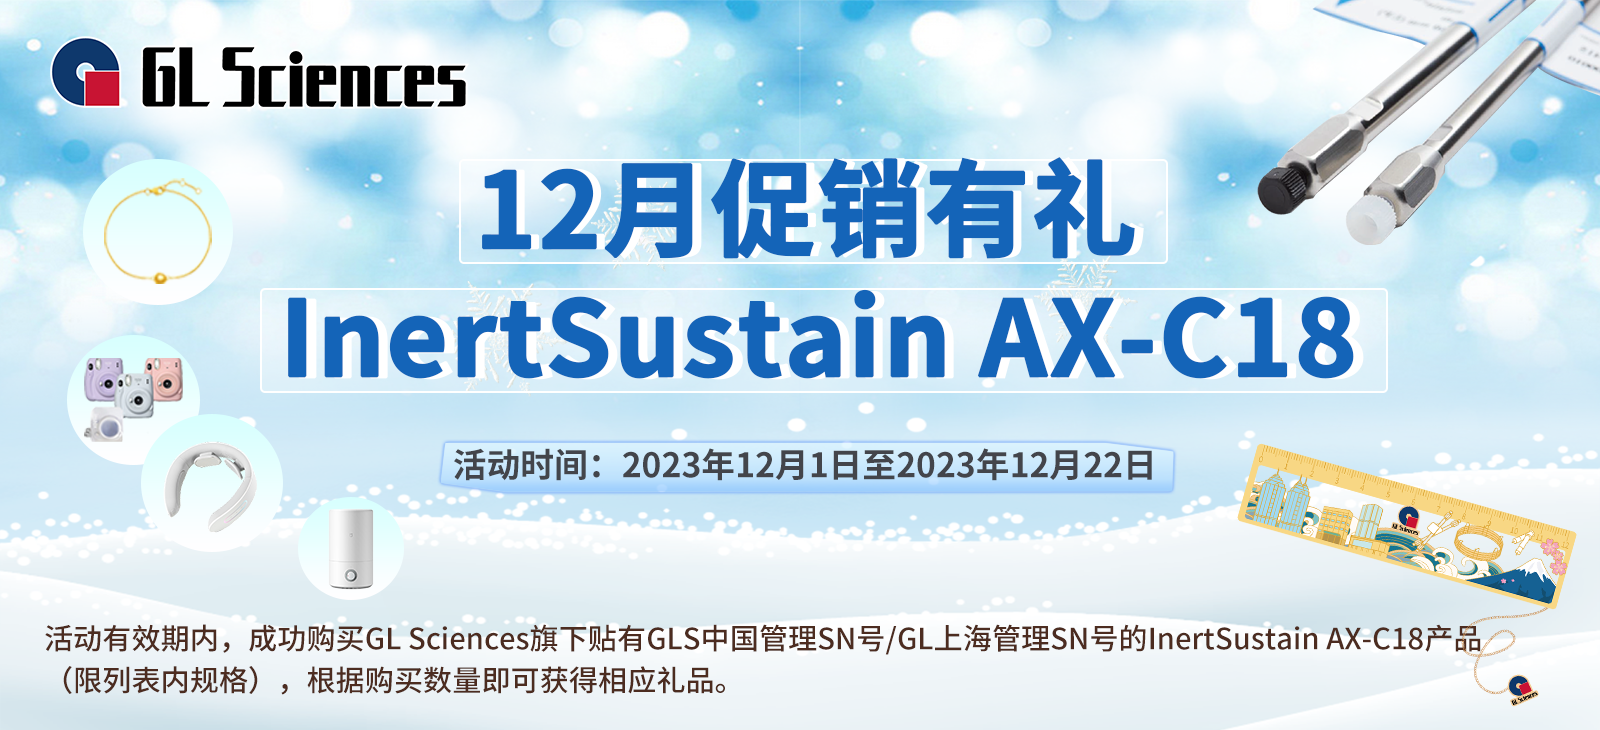 12月促销有礼 | GL Sciences InertSustain AX-C18促销活动